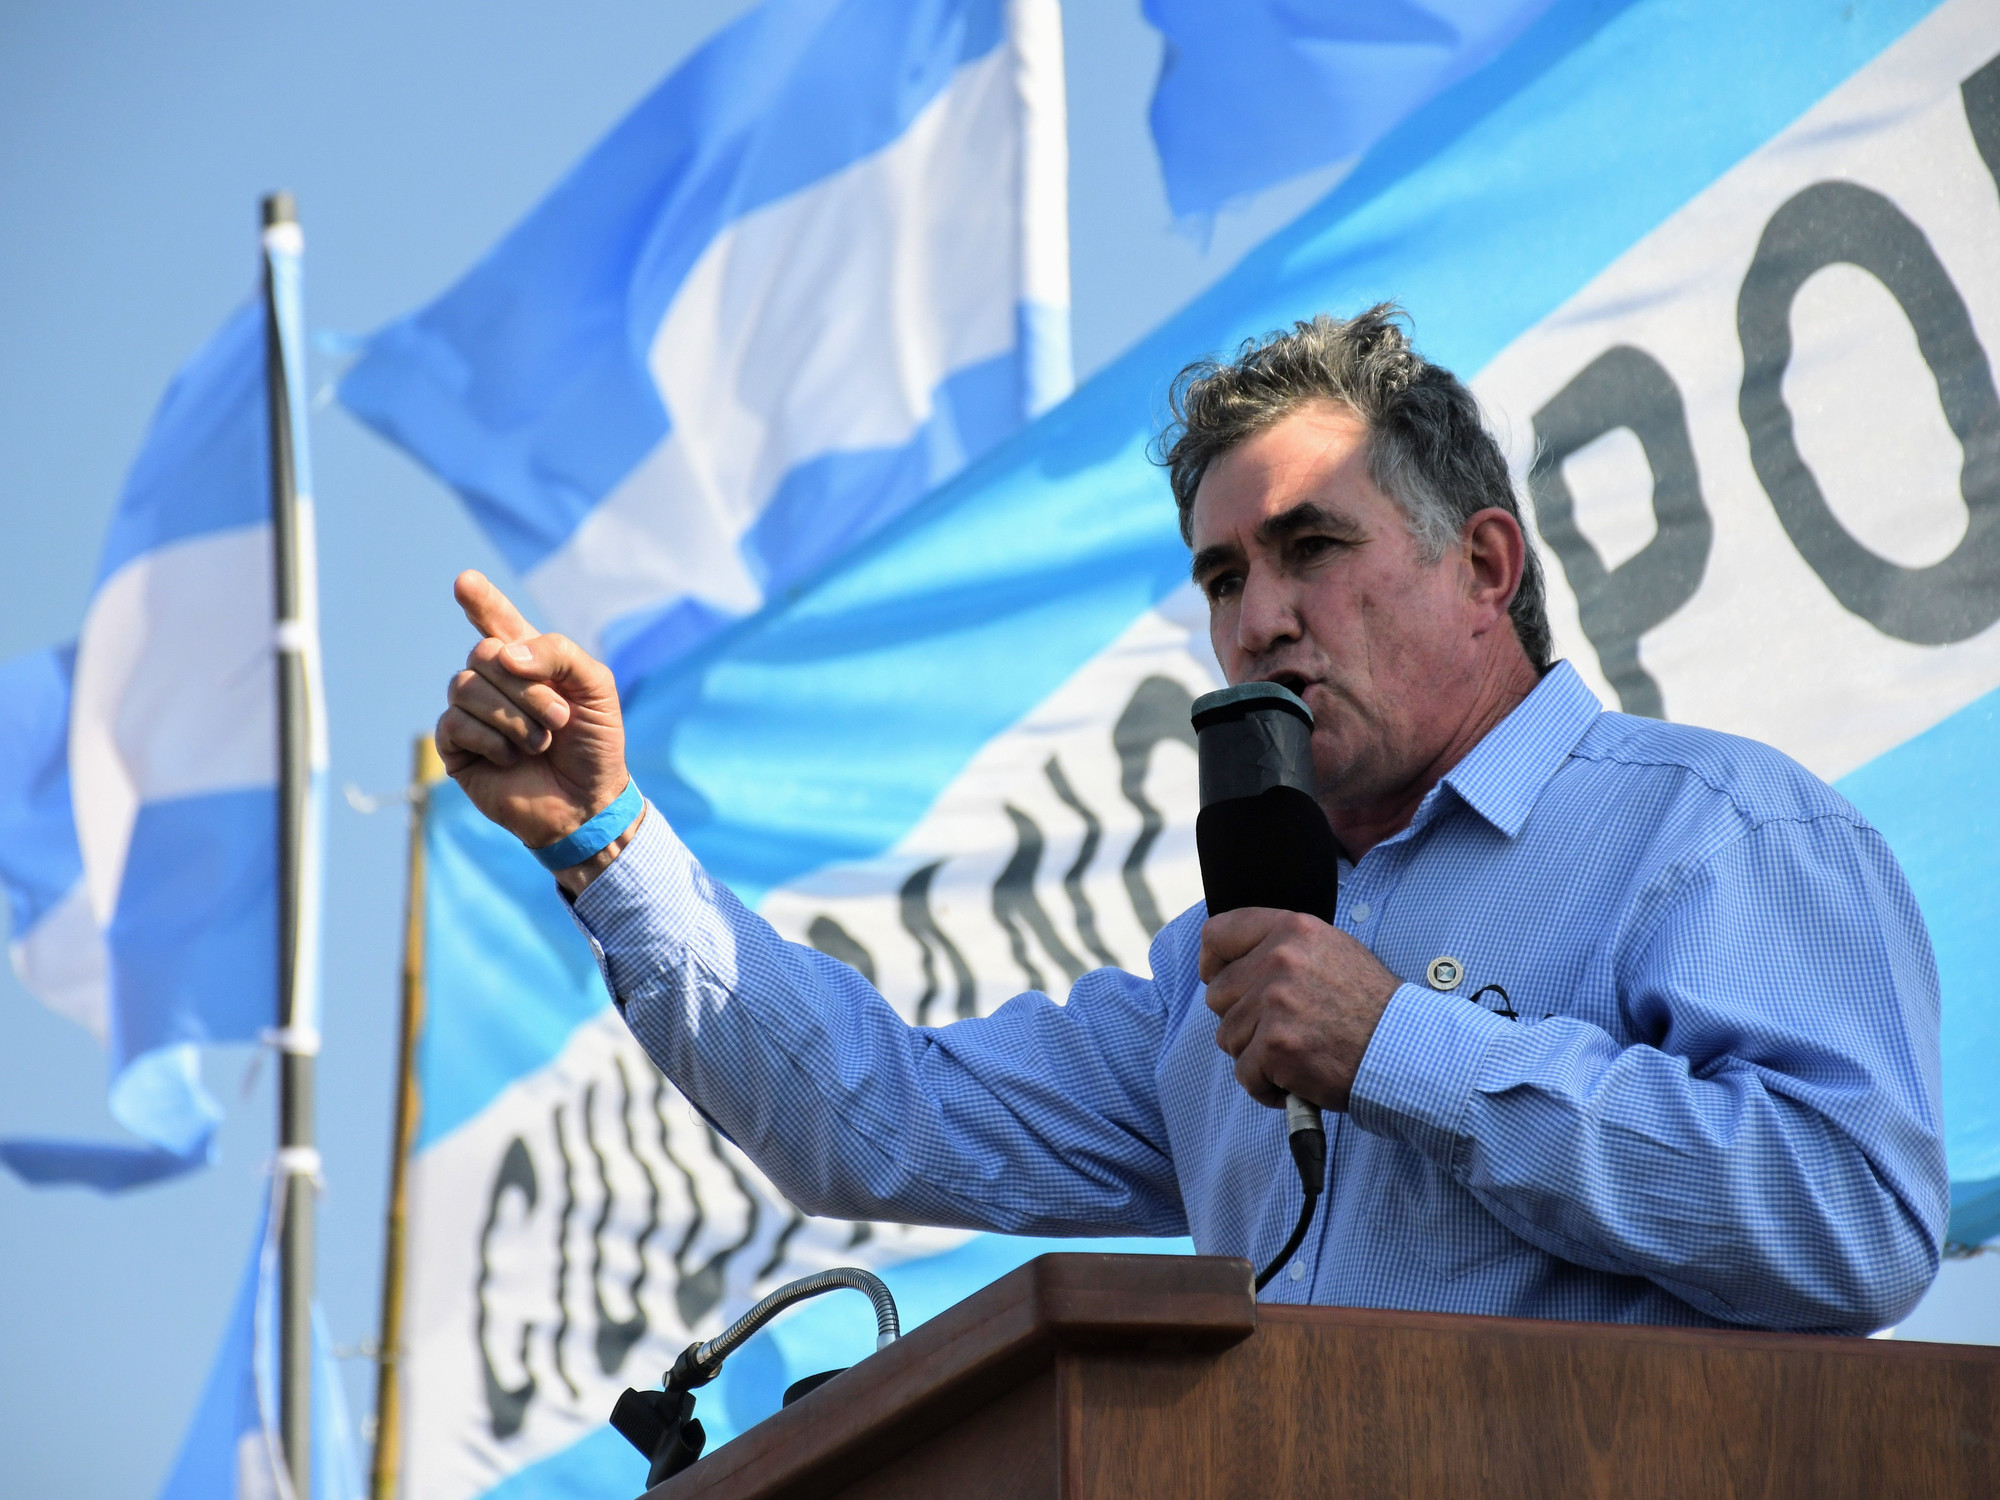 AGA: Hondo pesar por el fallecimiento de Carlos Achetoni, presidente de Federación Agraria